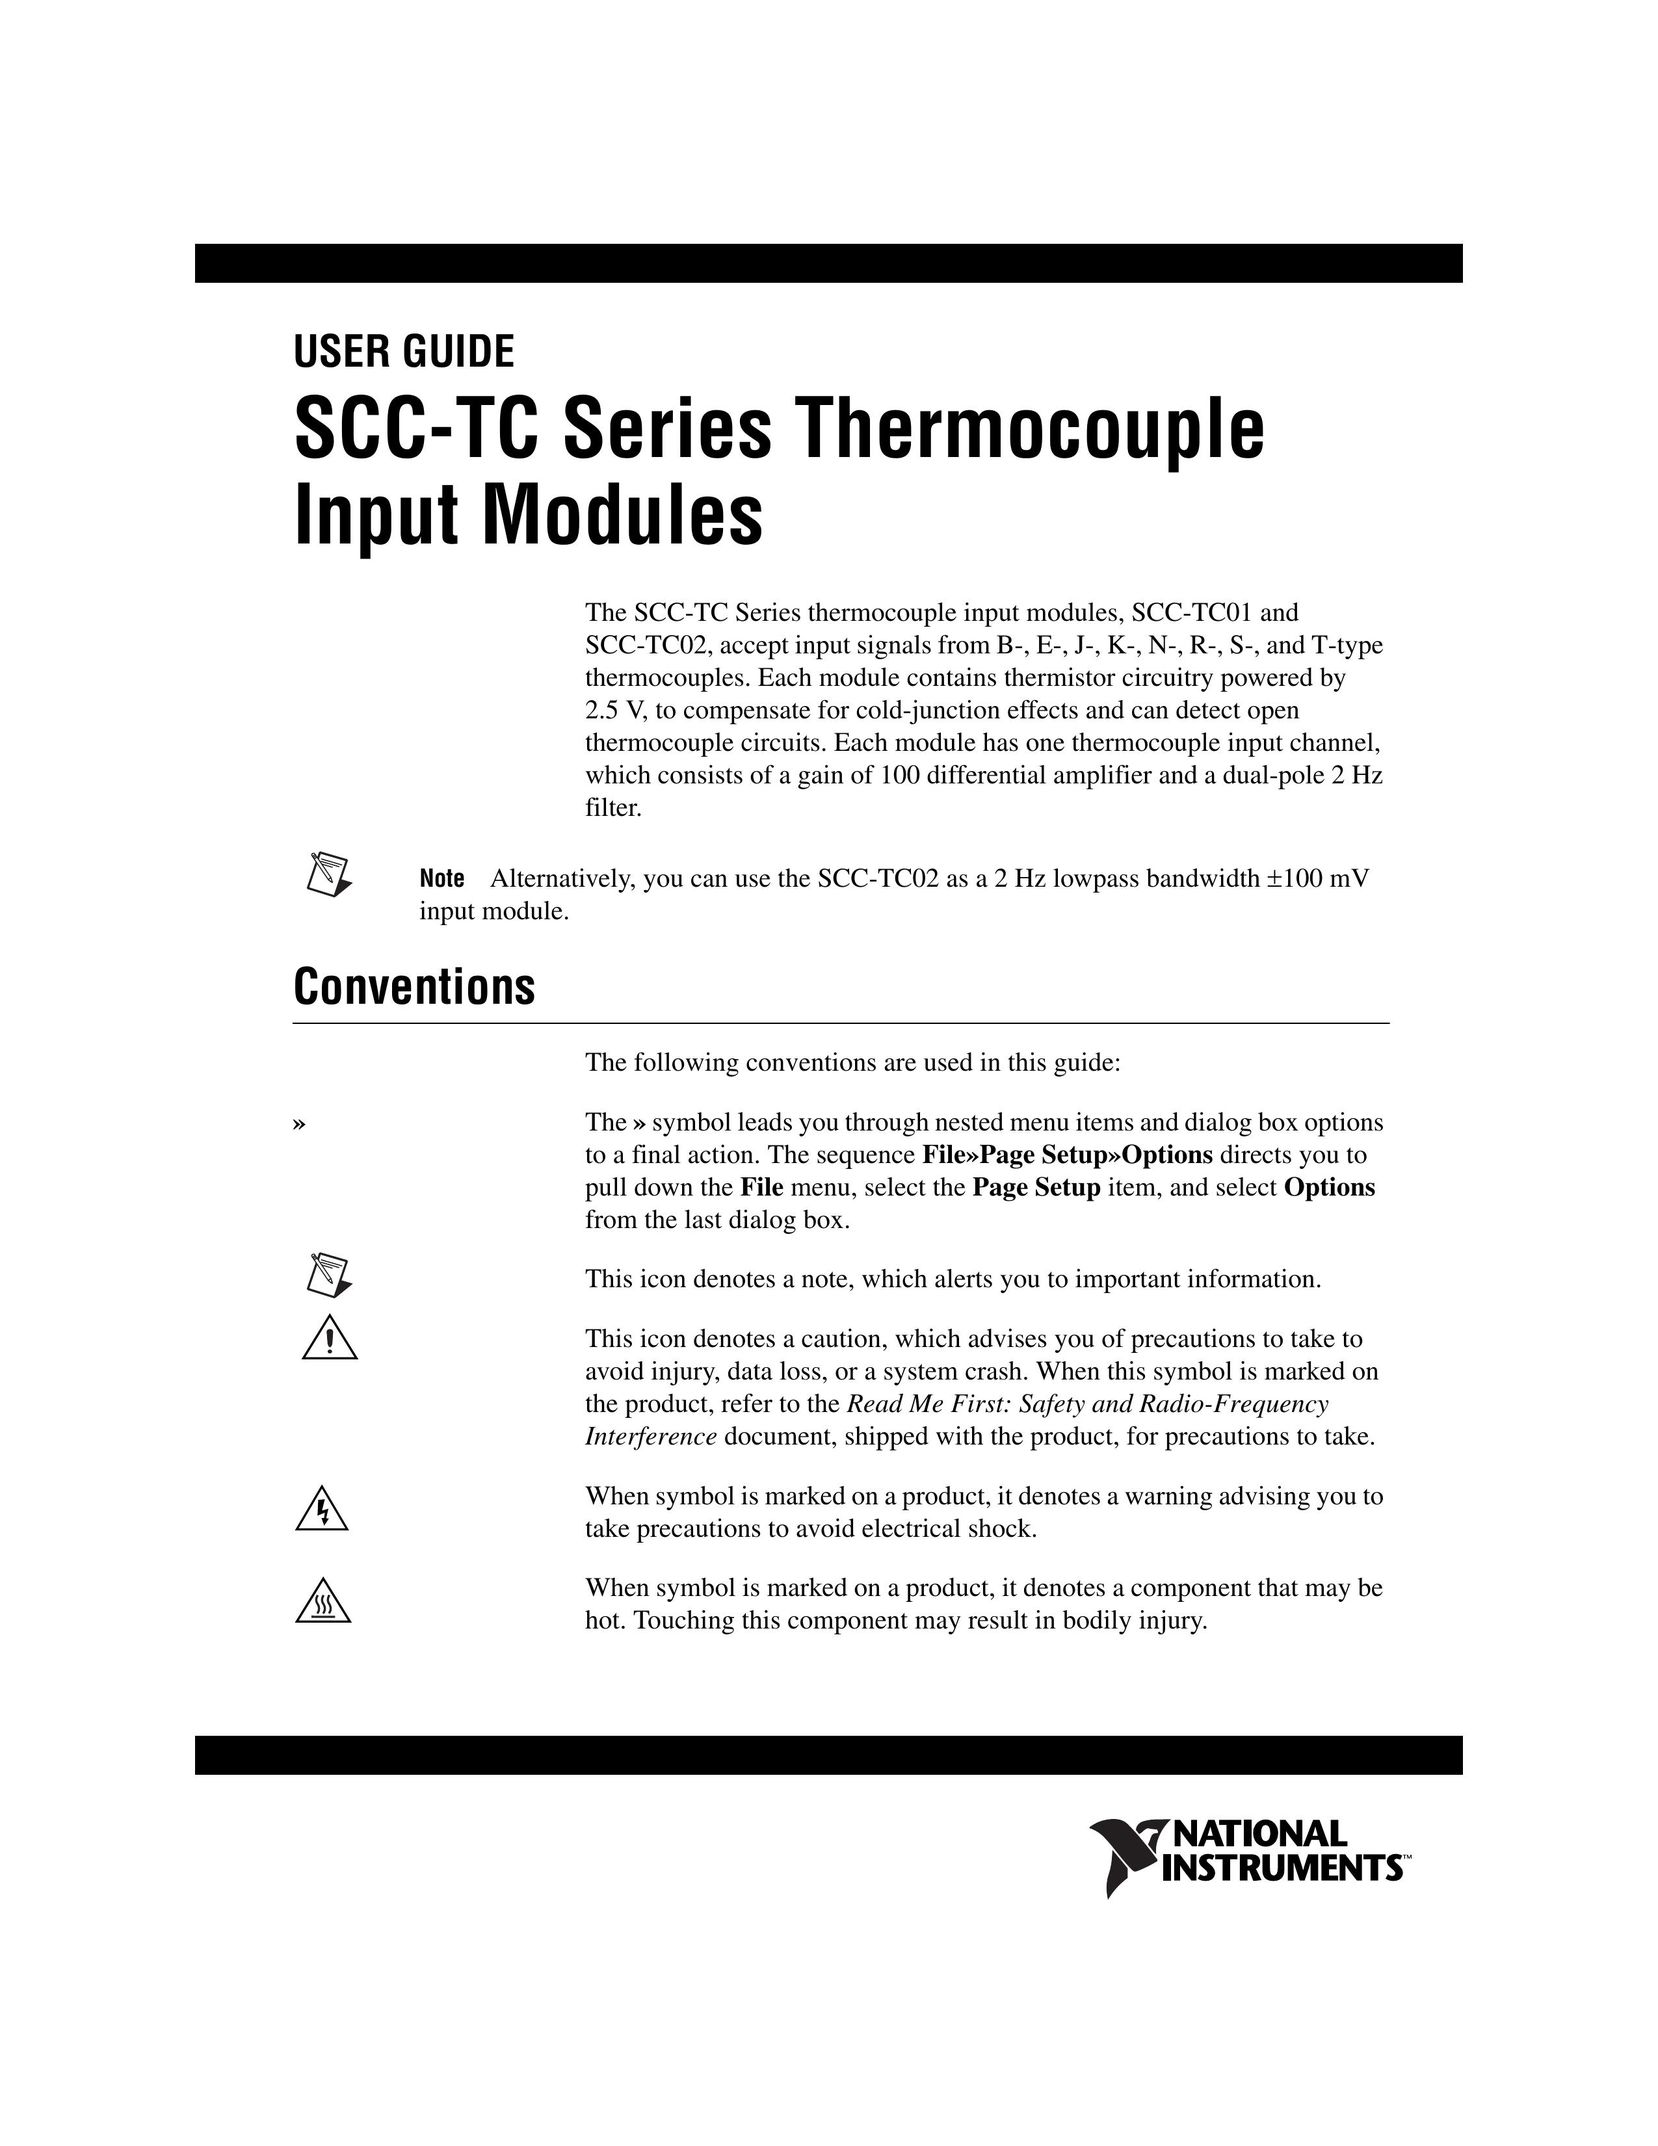 National Instruments SCC-TC02 Model Vehicle User Manual